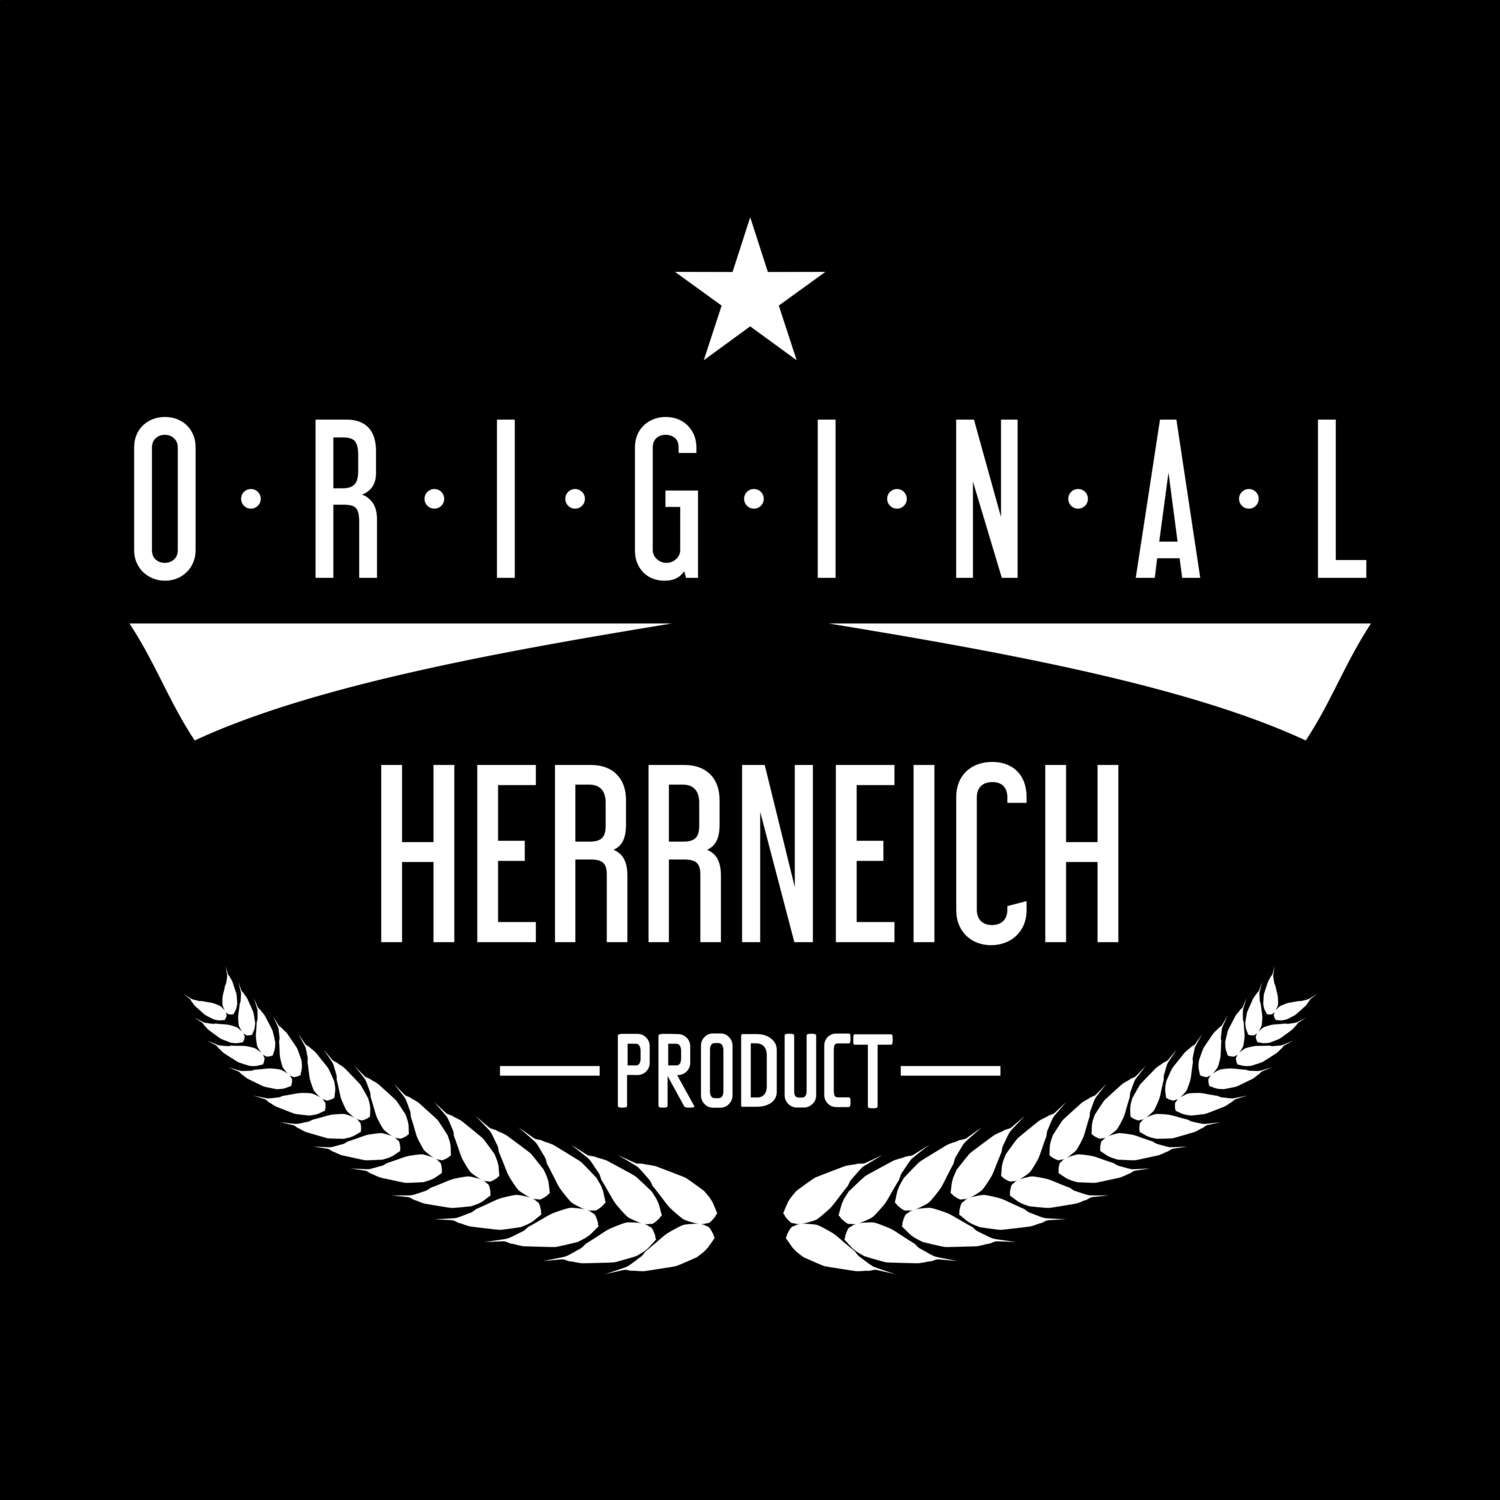 Herrneich T-Shirt »Original Product«